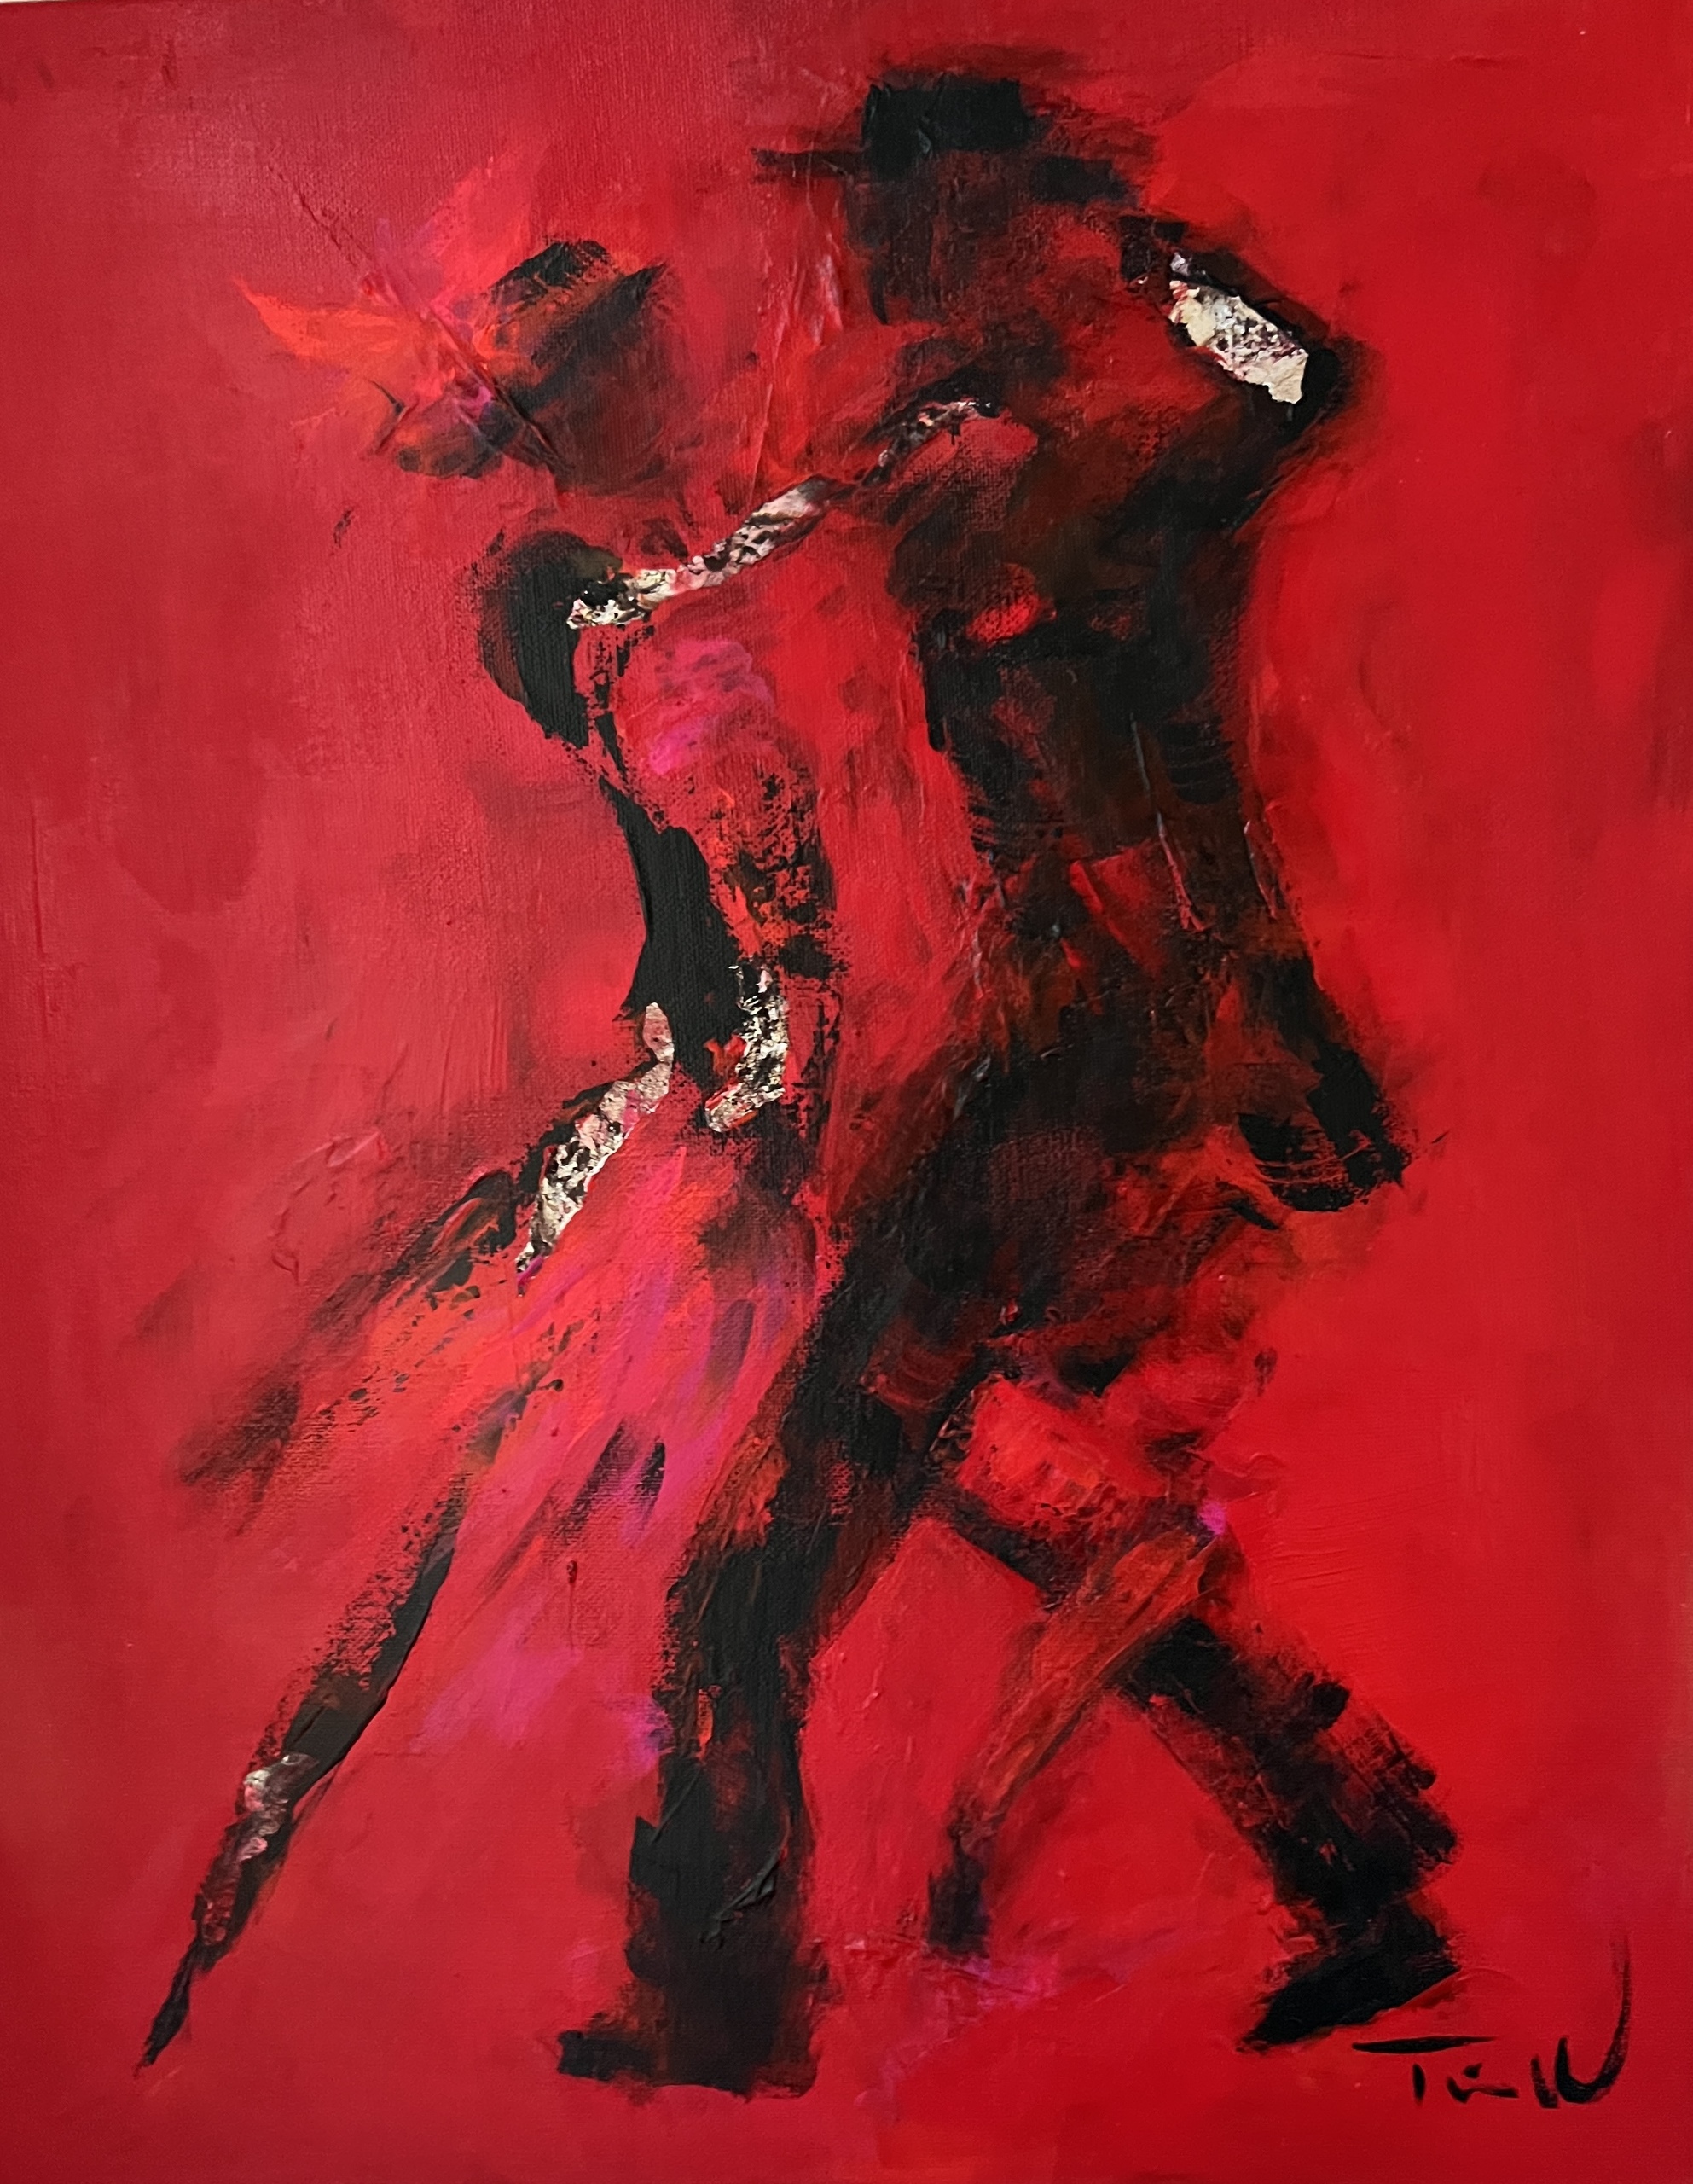 Flot maleri af tangodanser i rød, sort og hvid og den karakteristiske  dansefatning.